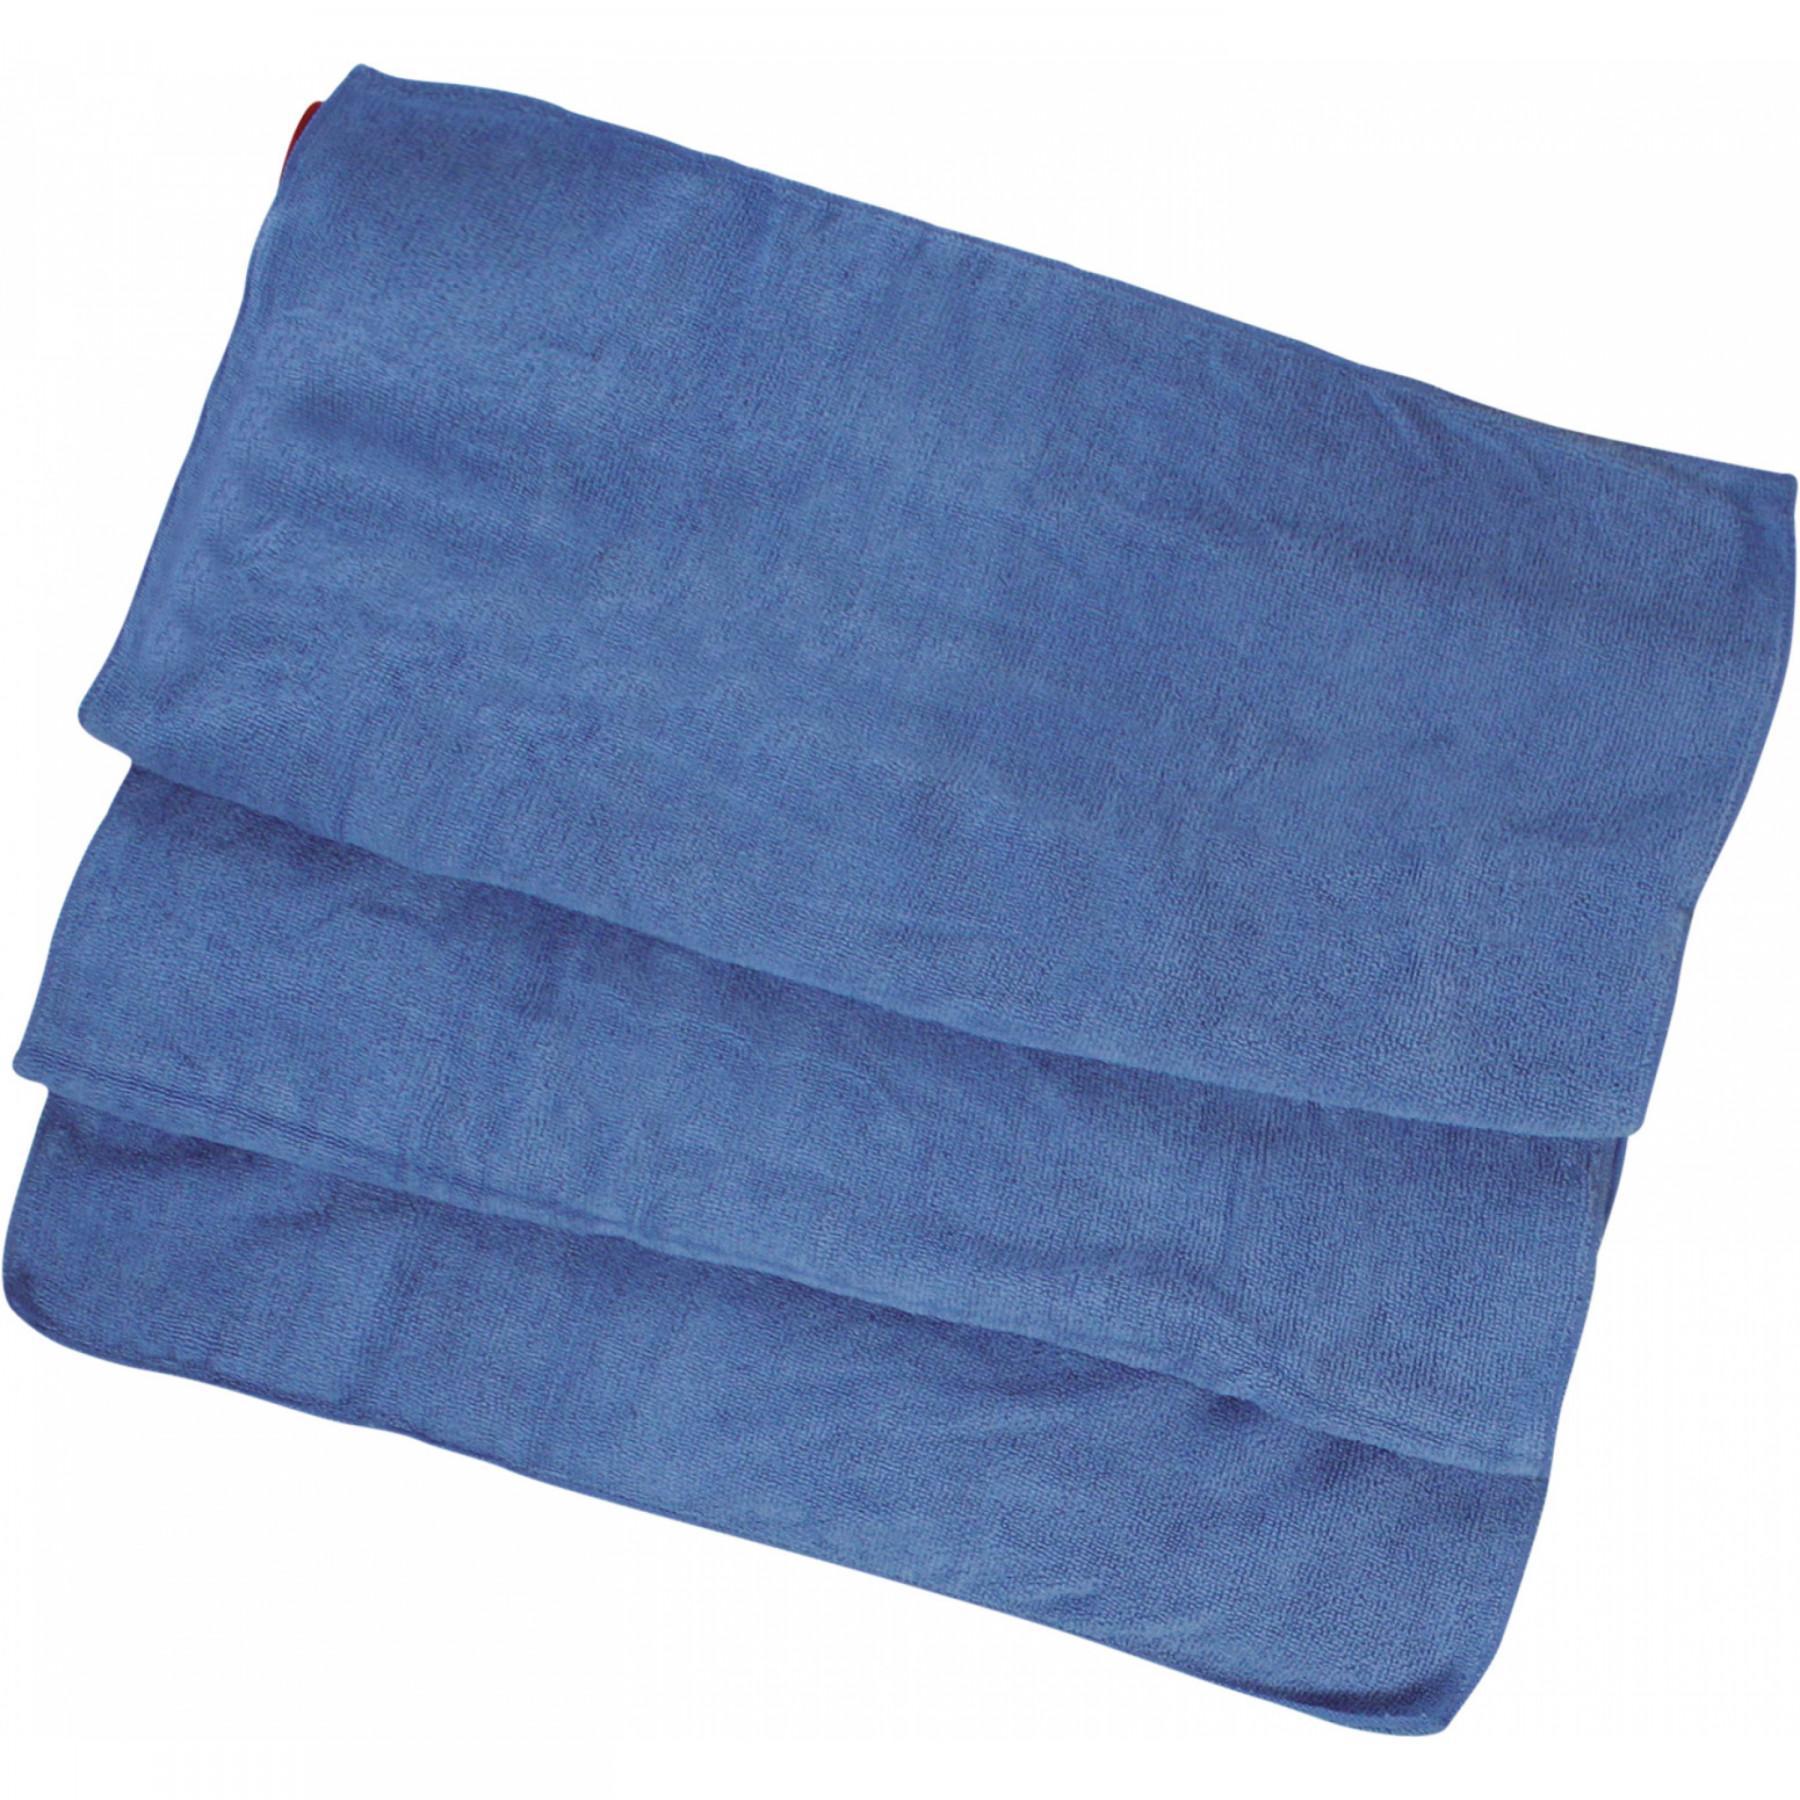 Soft towel Ferrino xl 120 x 60 cm